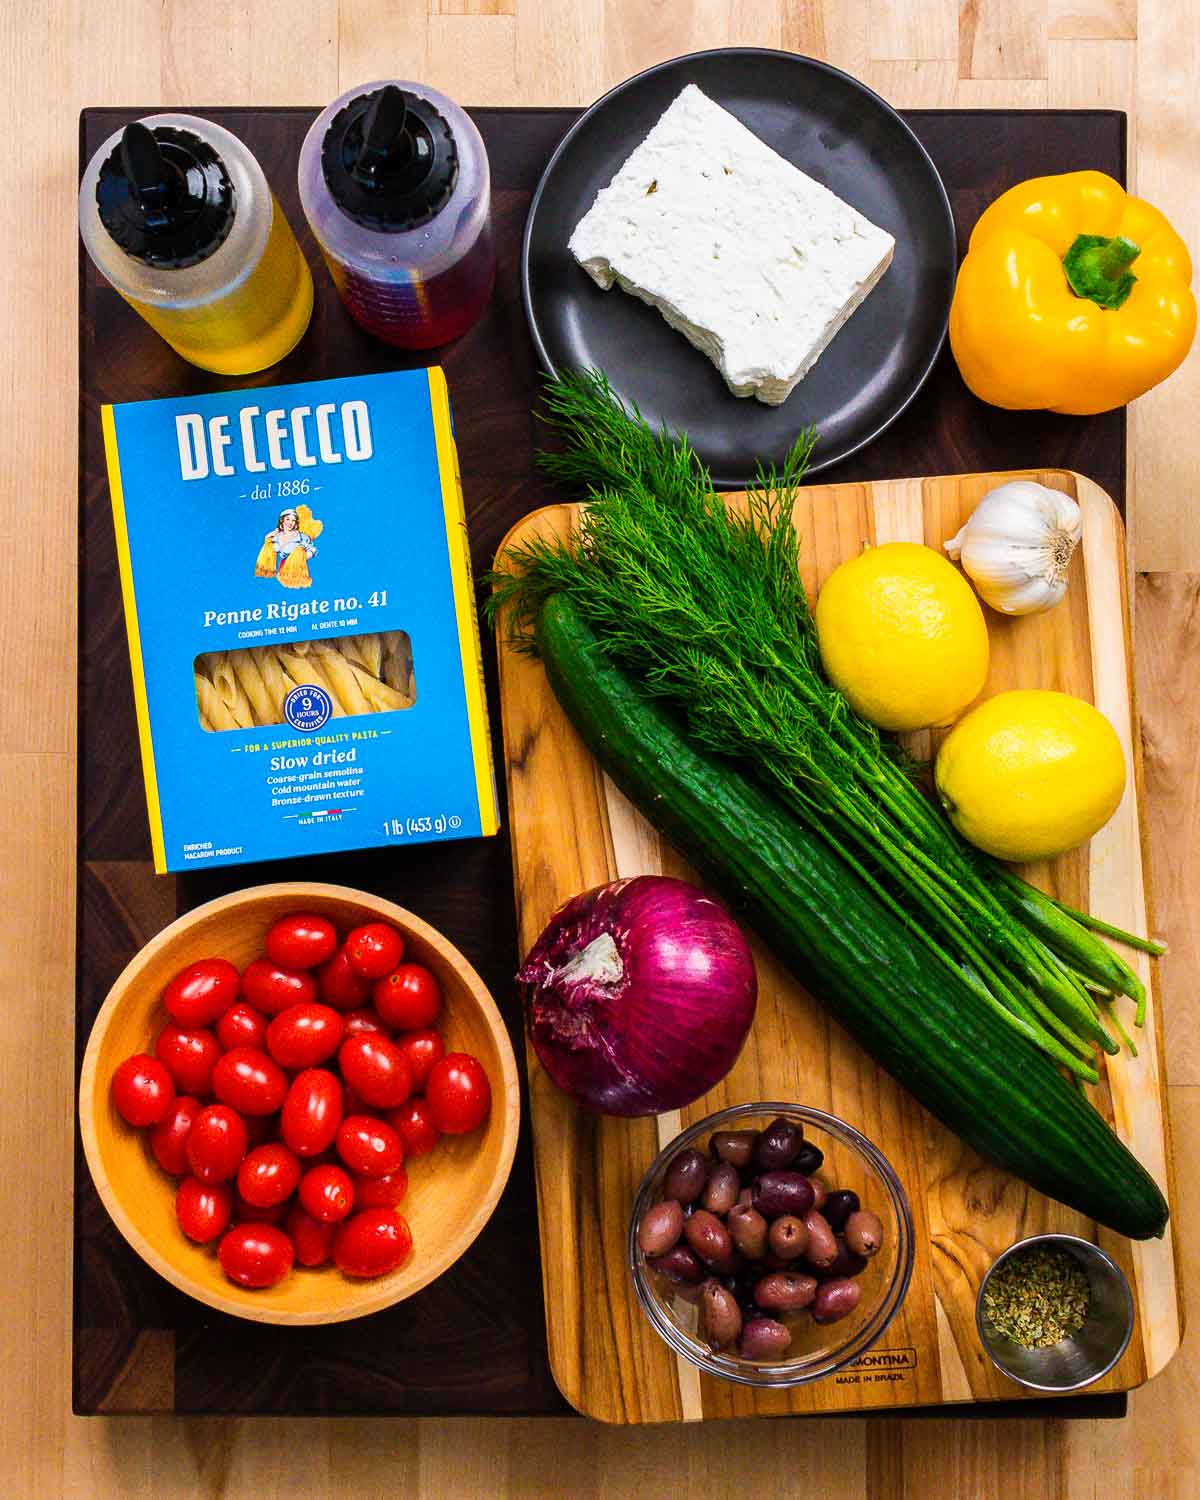 Ingredients shown: oil, vinegar, feta, pepper, pasta, tomatoes, onion, olives, cucumber, dill, lemons, garlic, and oregano.